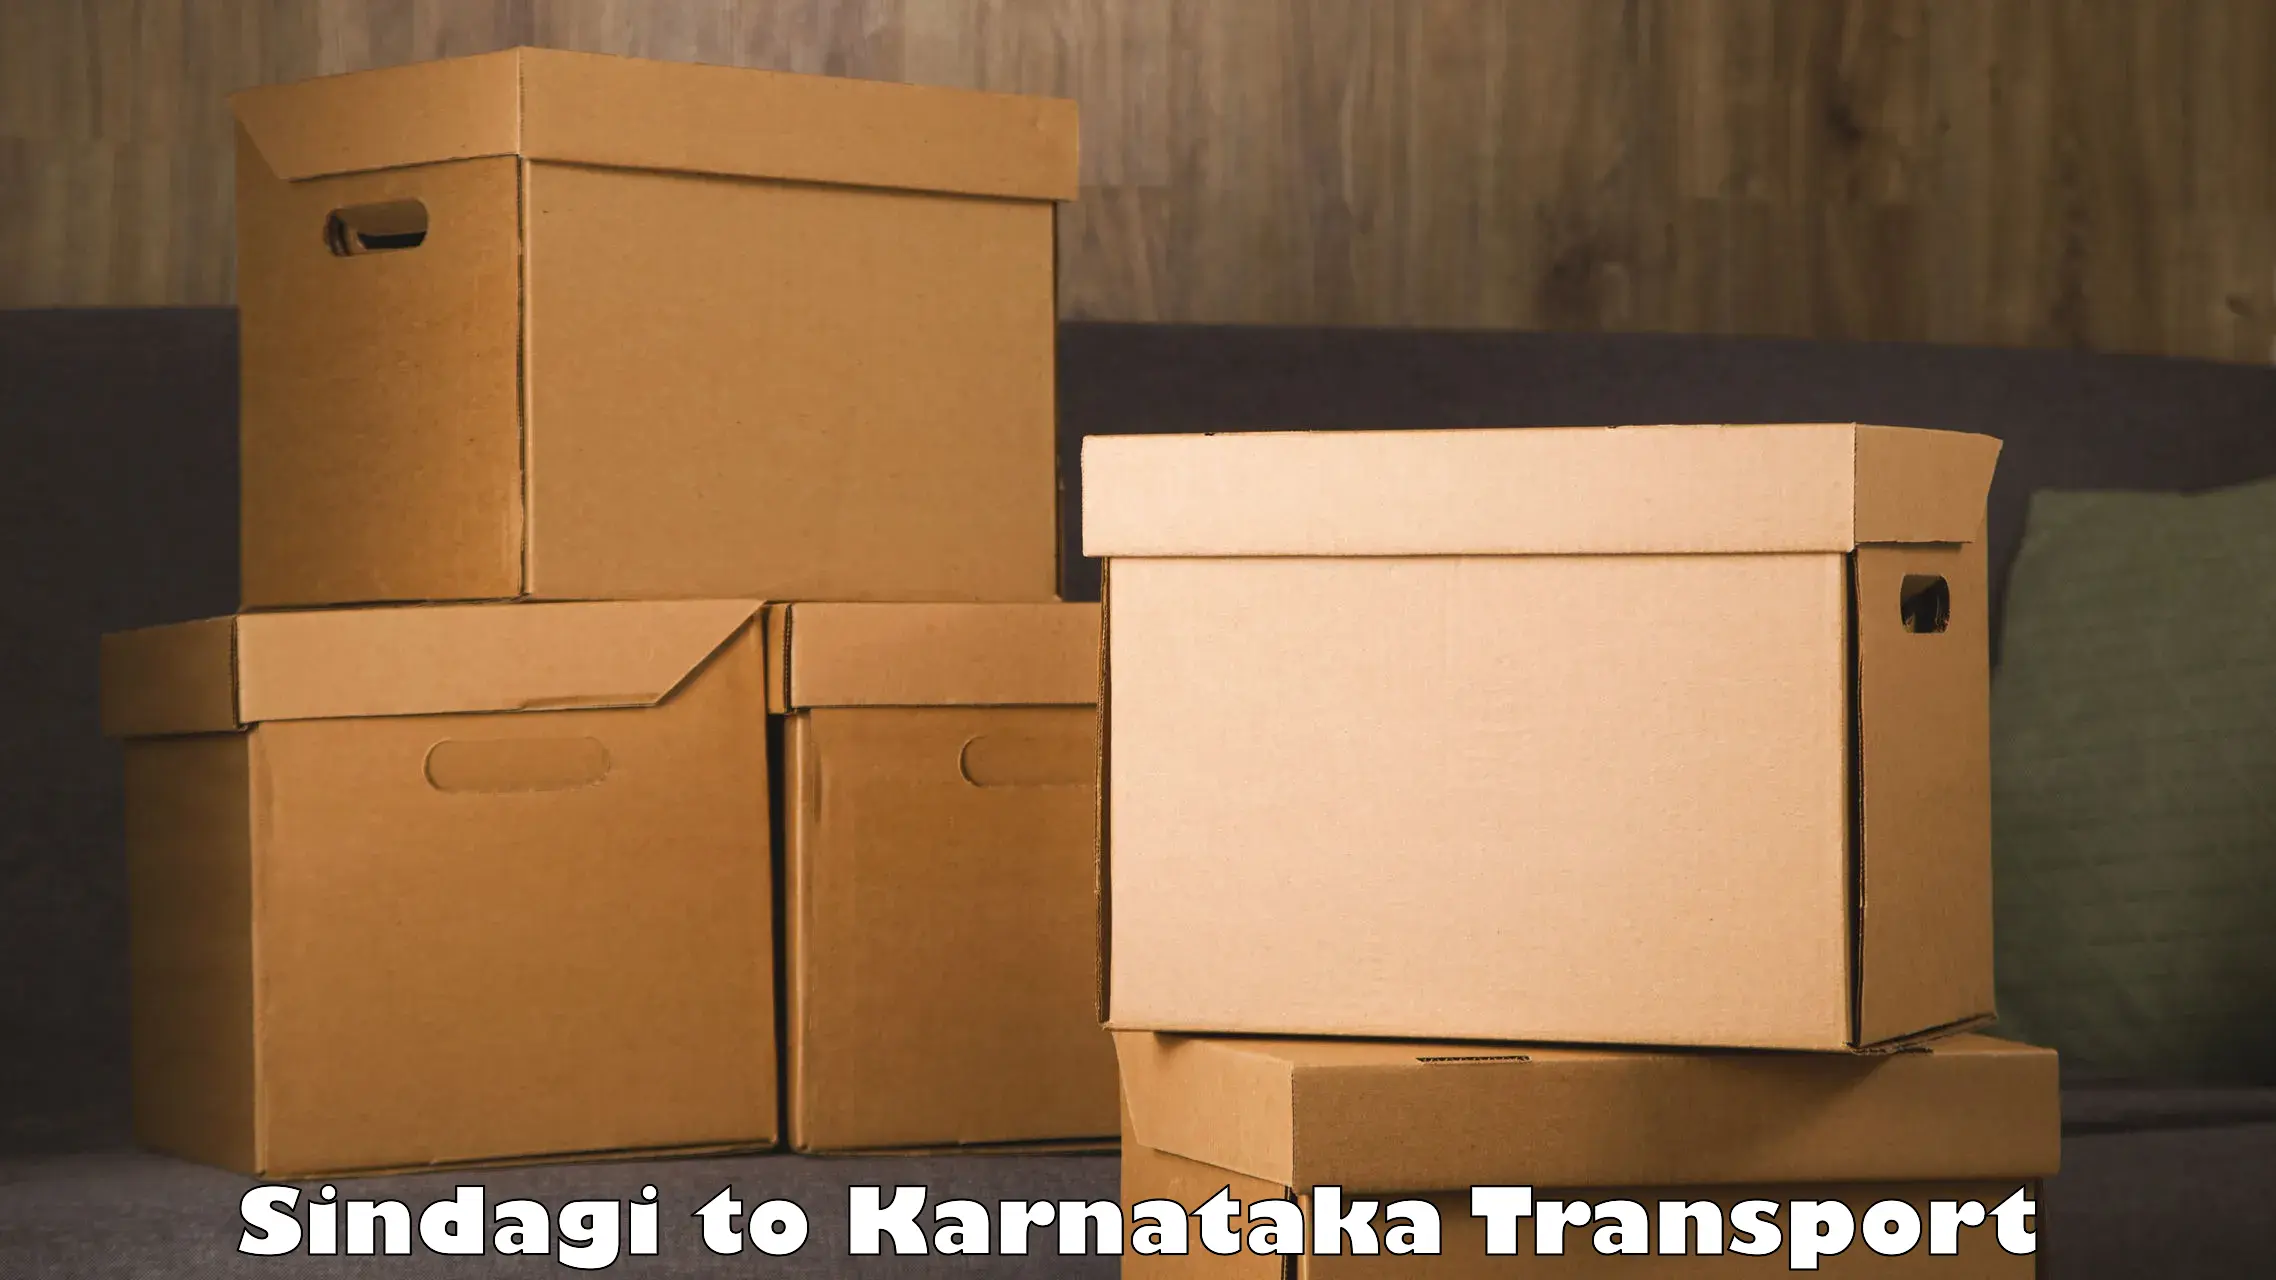 Truck transport companies in India Sindagi to Bangalore